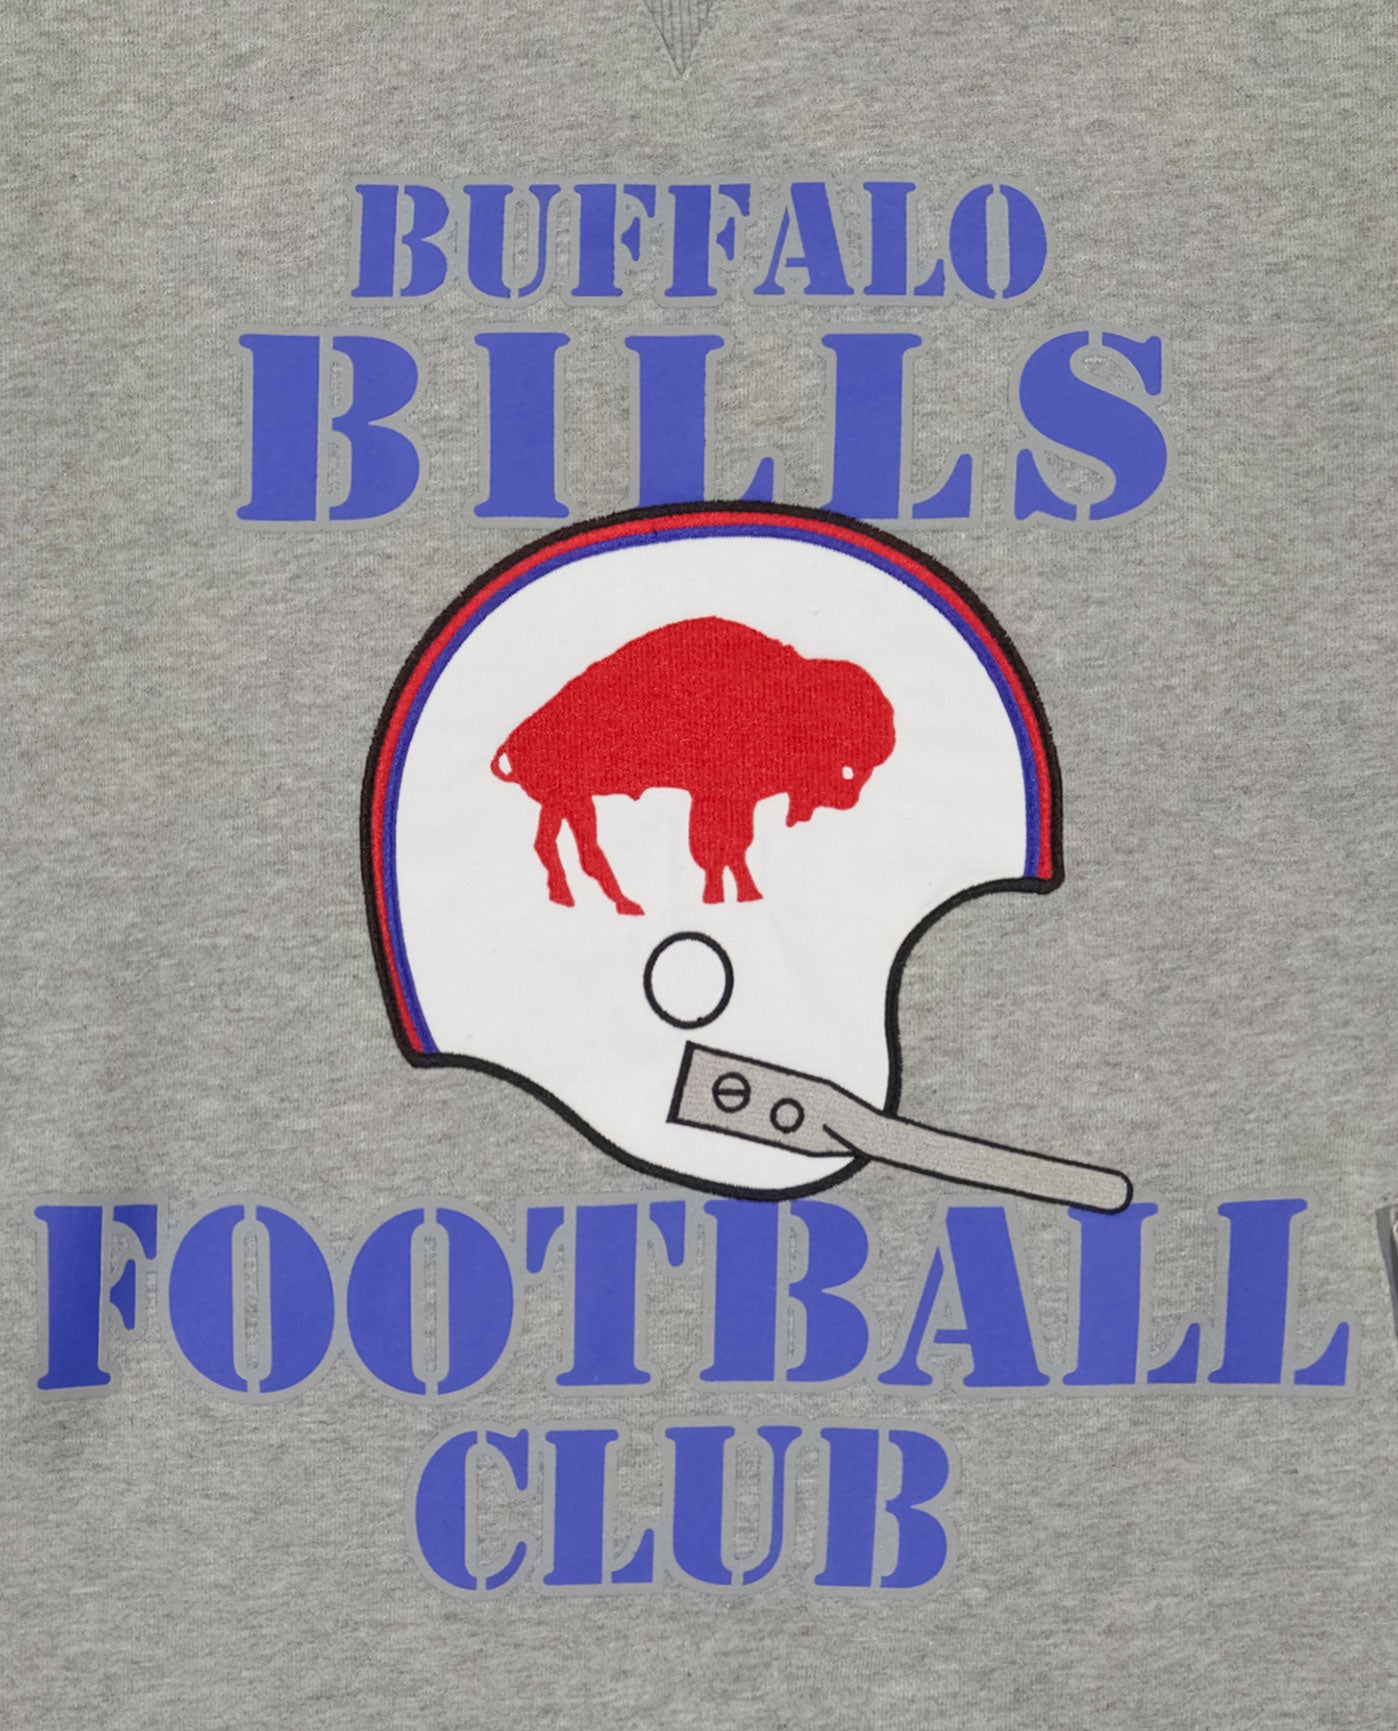 BUFFALO BILLS FOOTBALL CLUB writing and helmet logo | Bills Heather Grey